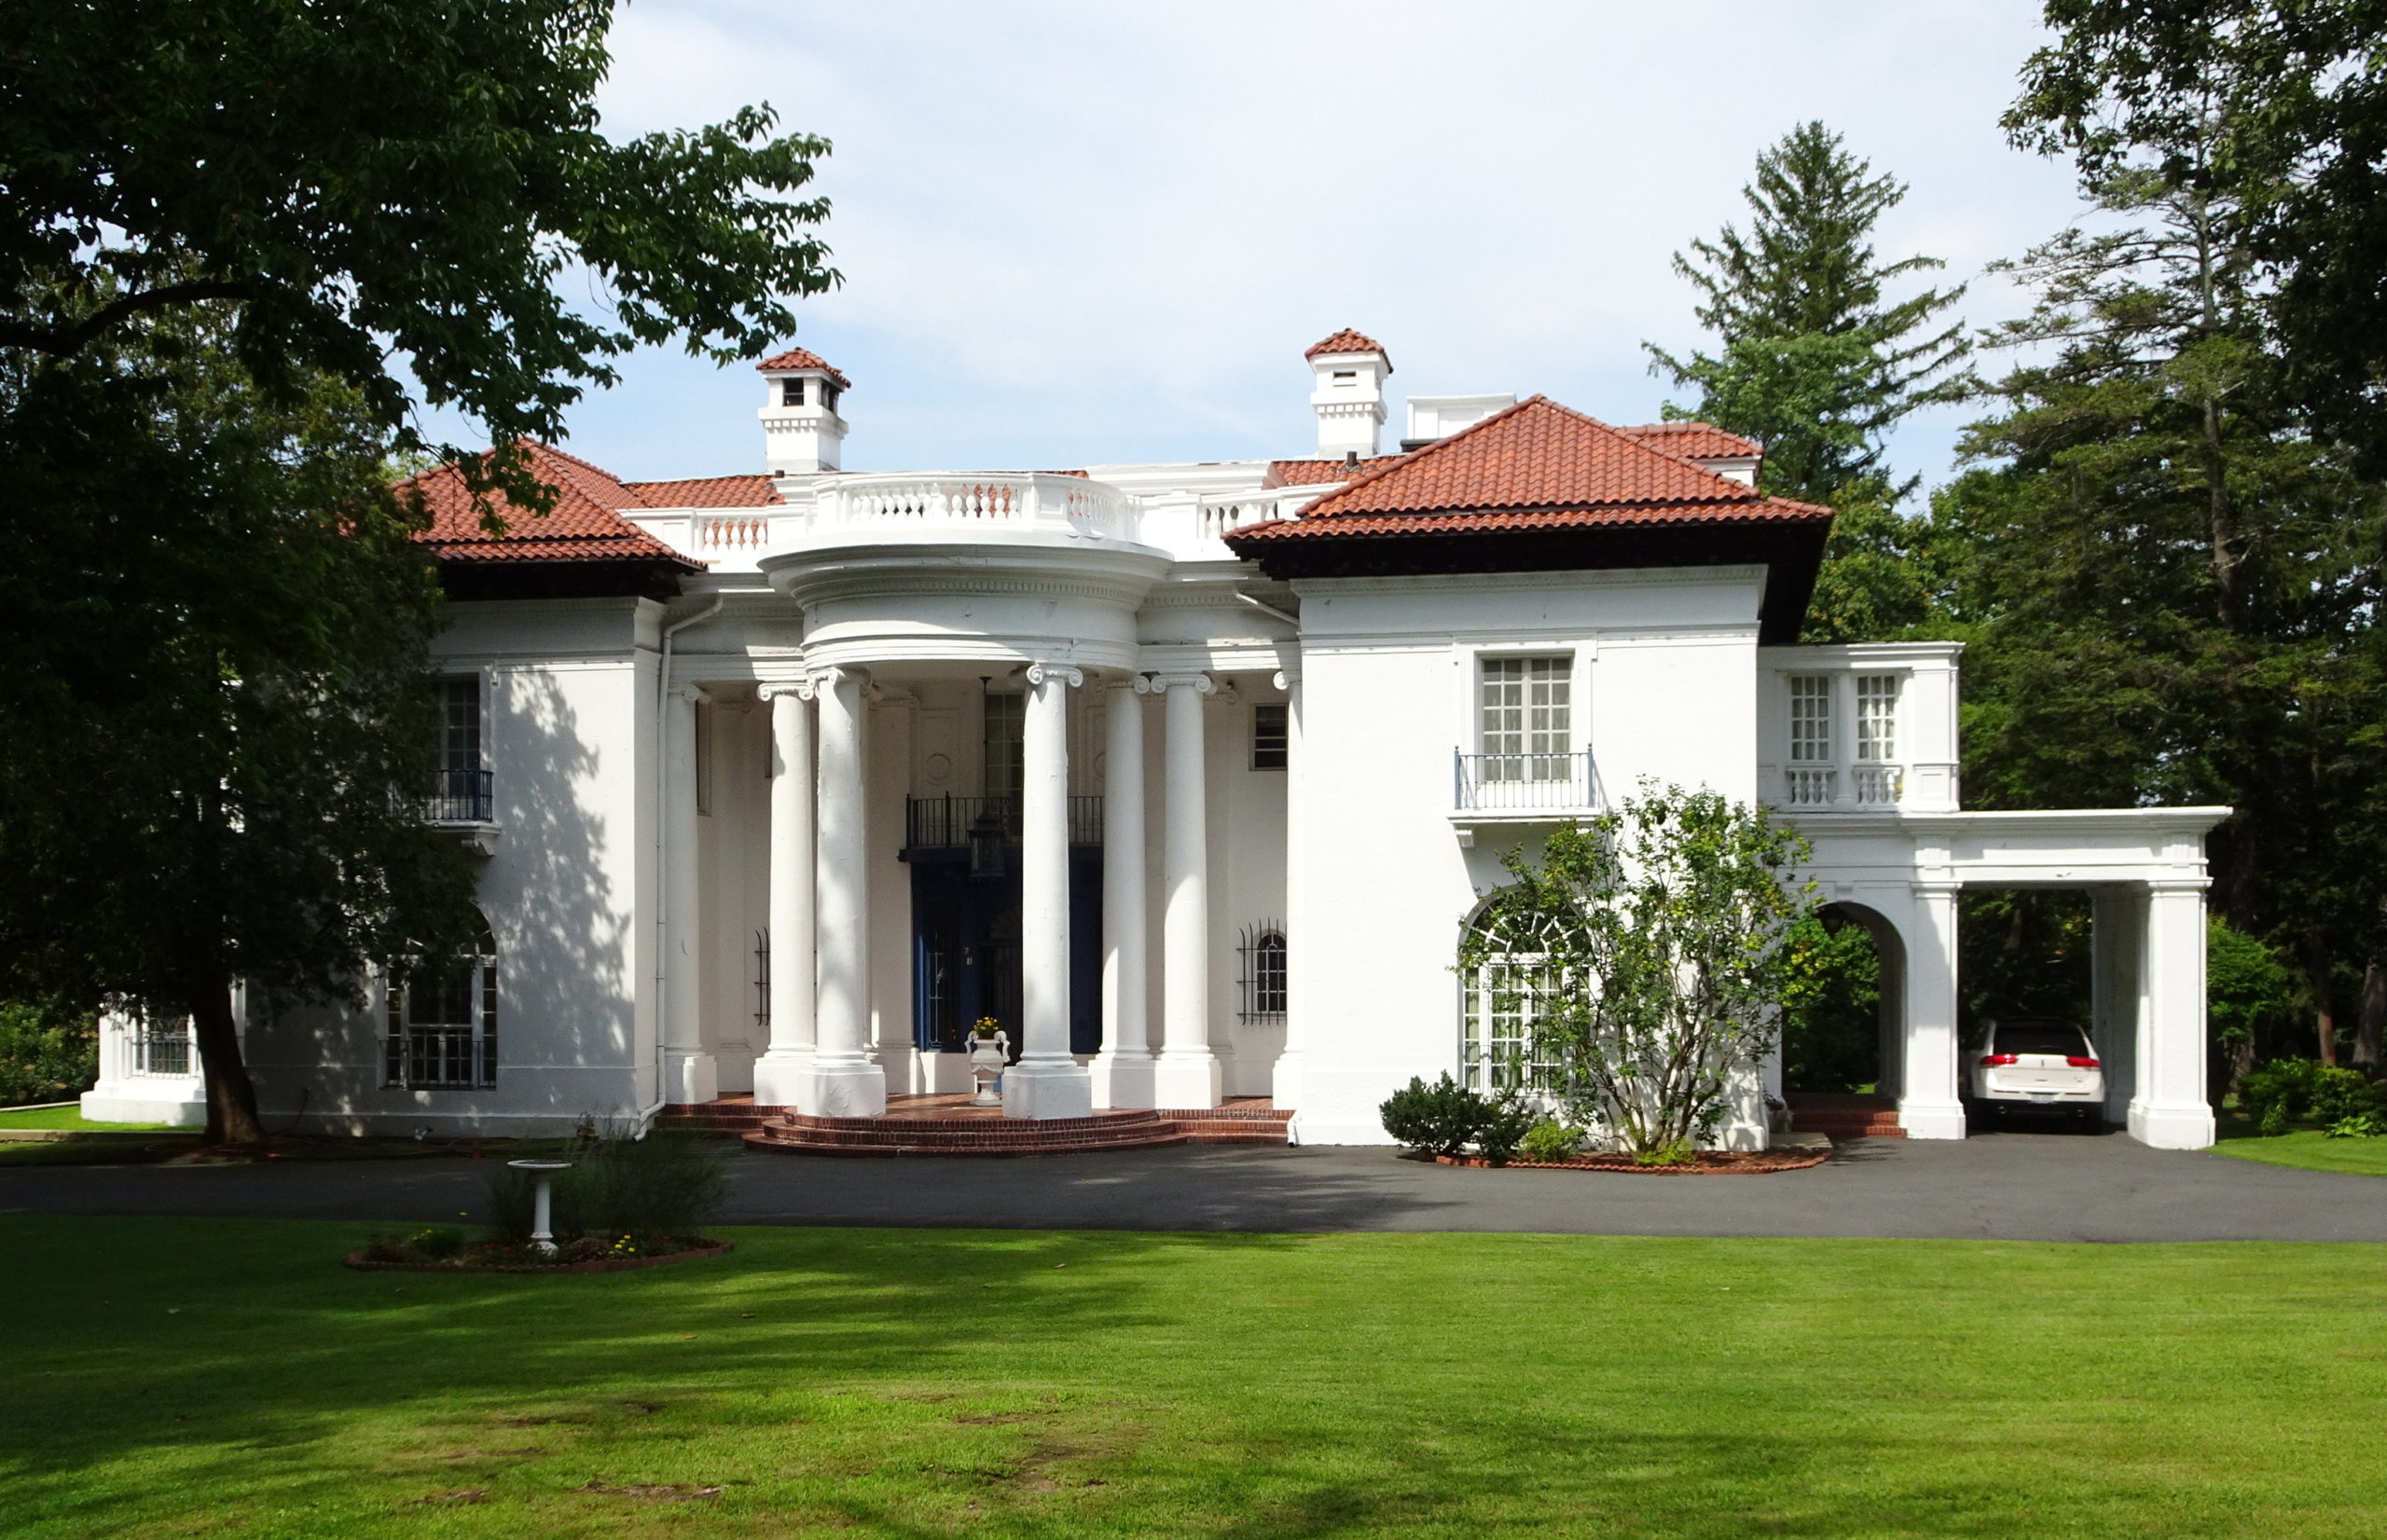 Villa Lewaro, Irvington, New York Home of Madame CJ Walker